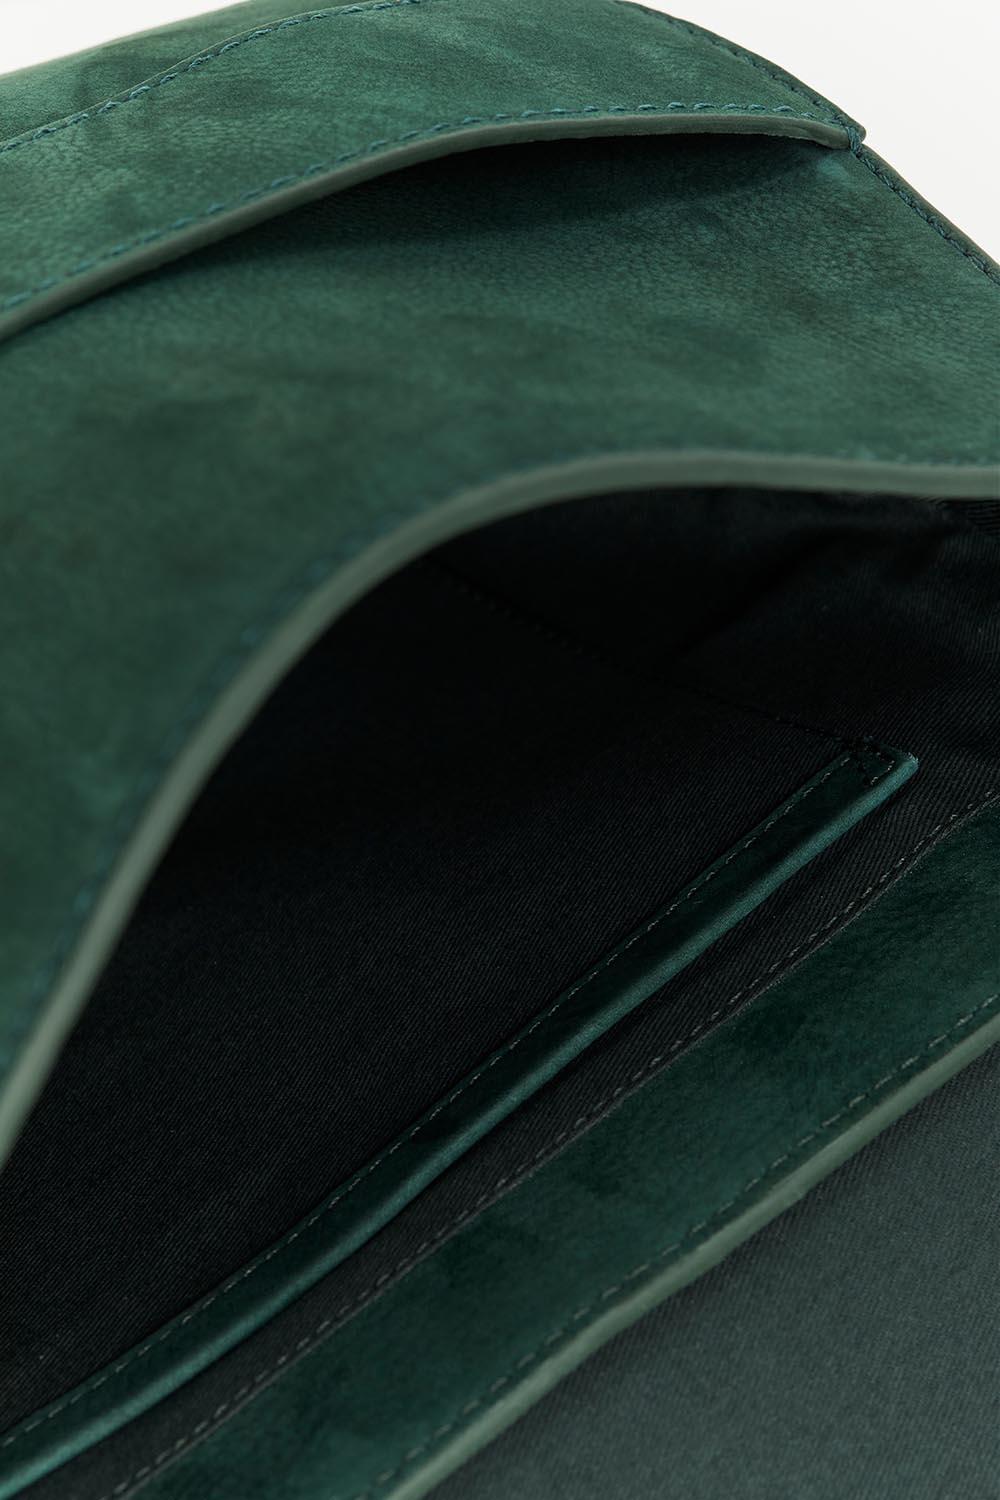 ALIBY - Sac besace vert en cuir nubuck - petit modèle